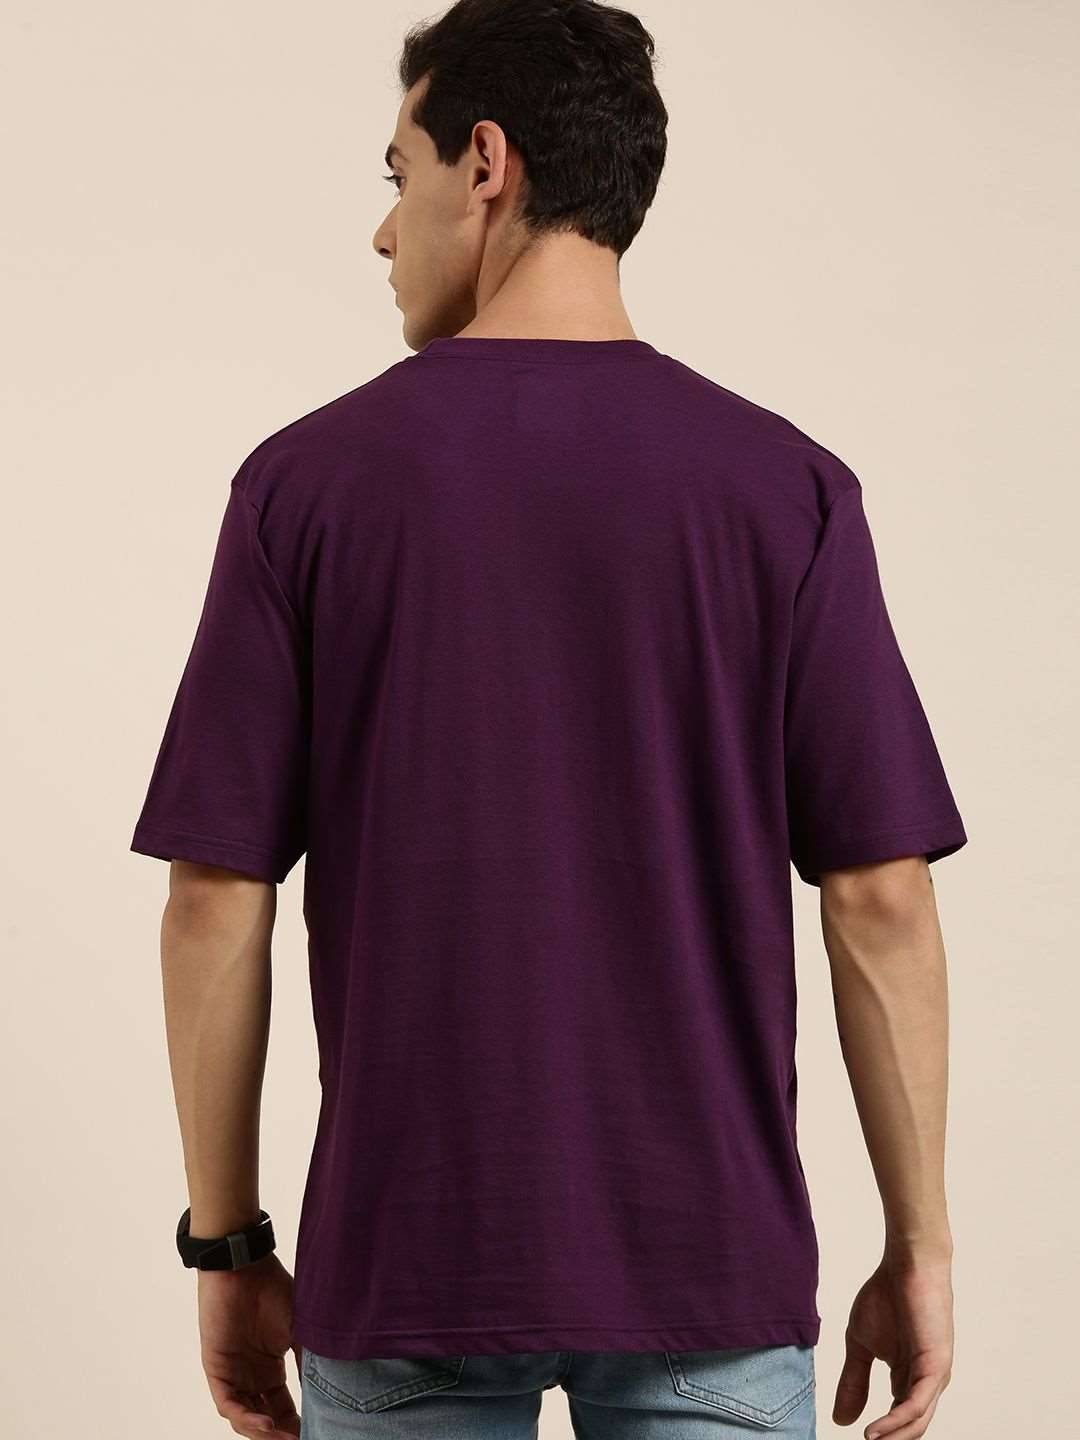 Dillinger Purple Typographic Oversized T-Shirt